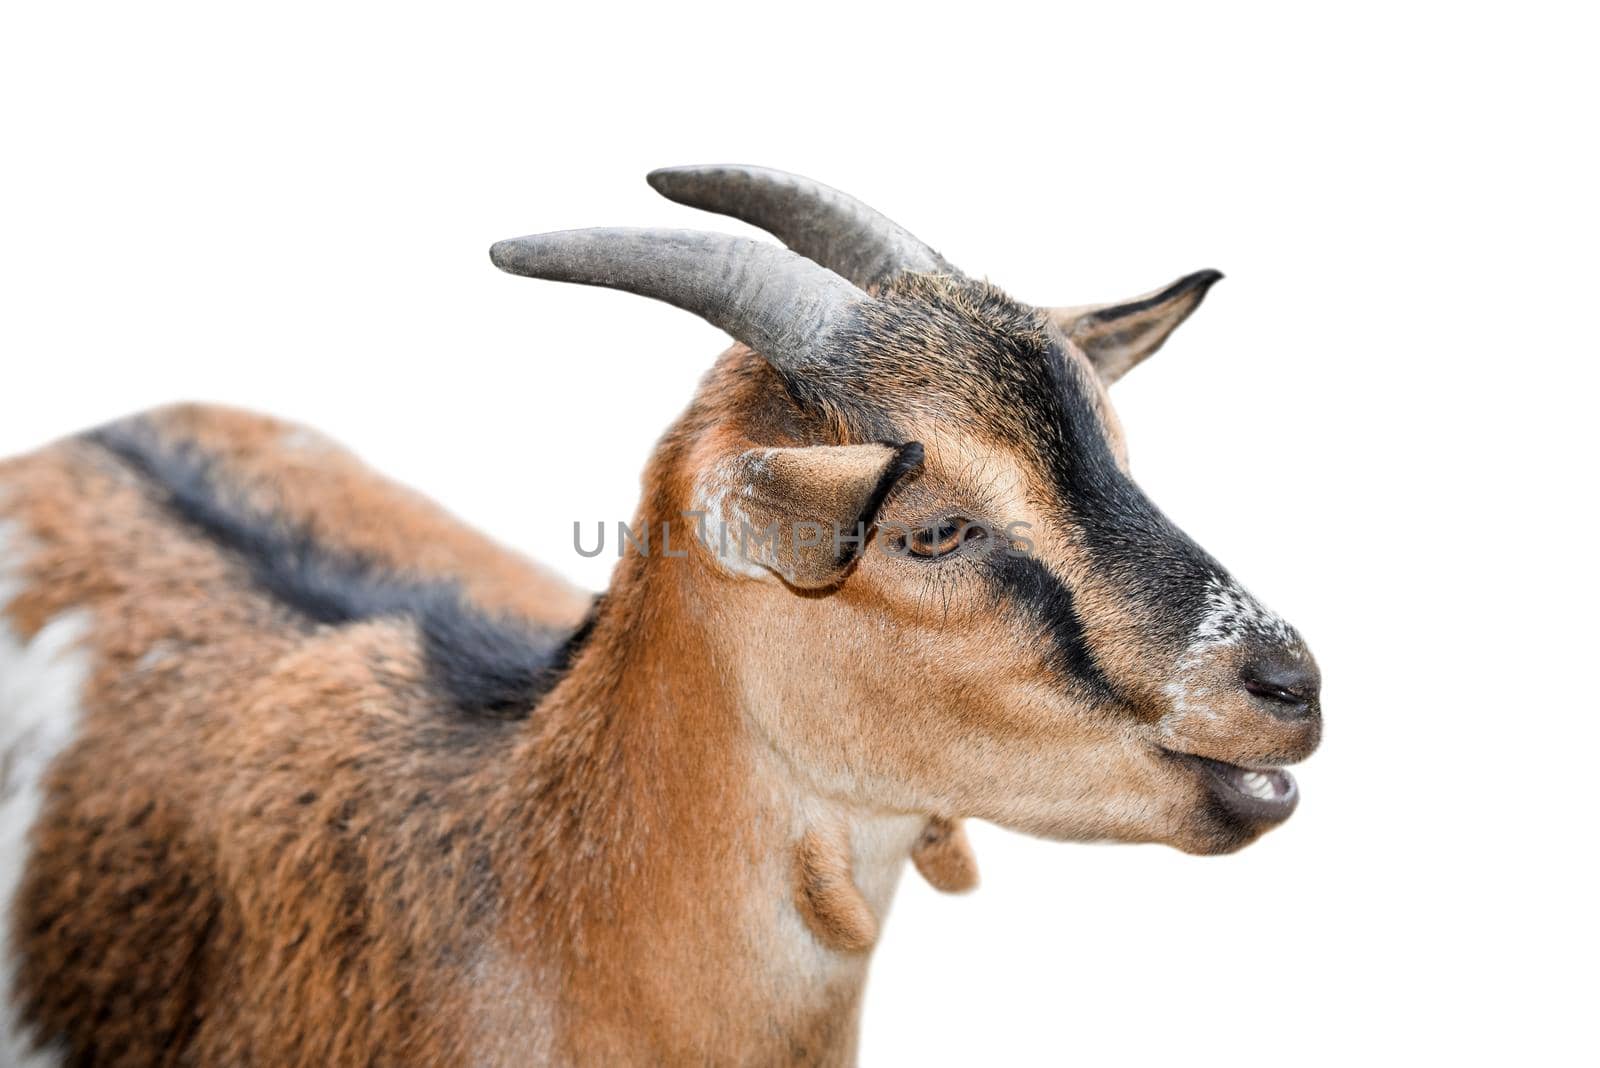 Goat portrait close up. Funny goat head portrait isolated on white background by esvetleishaya